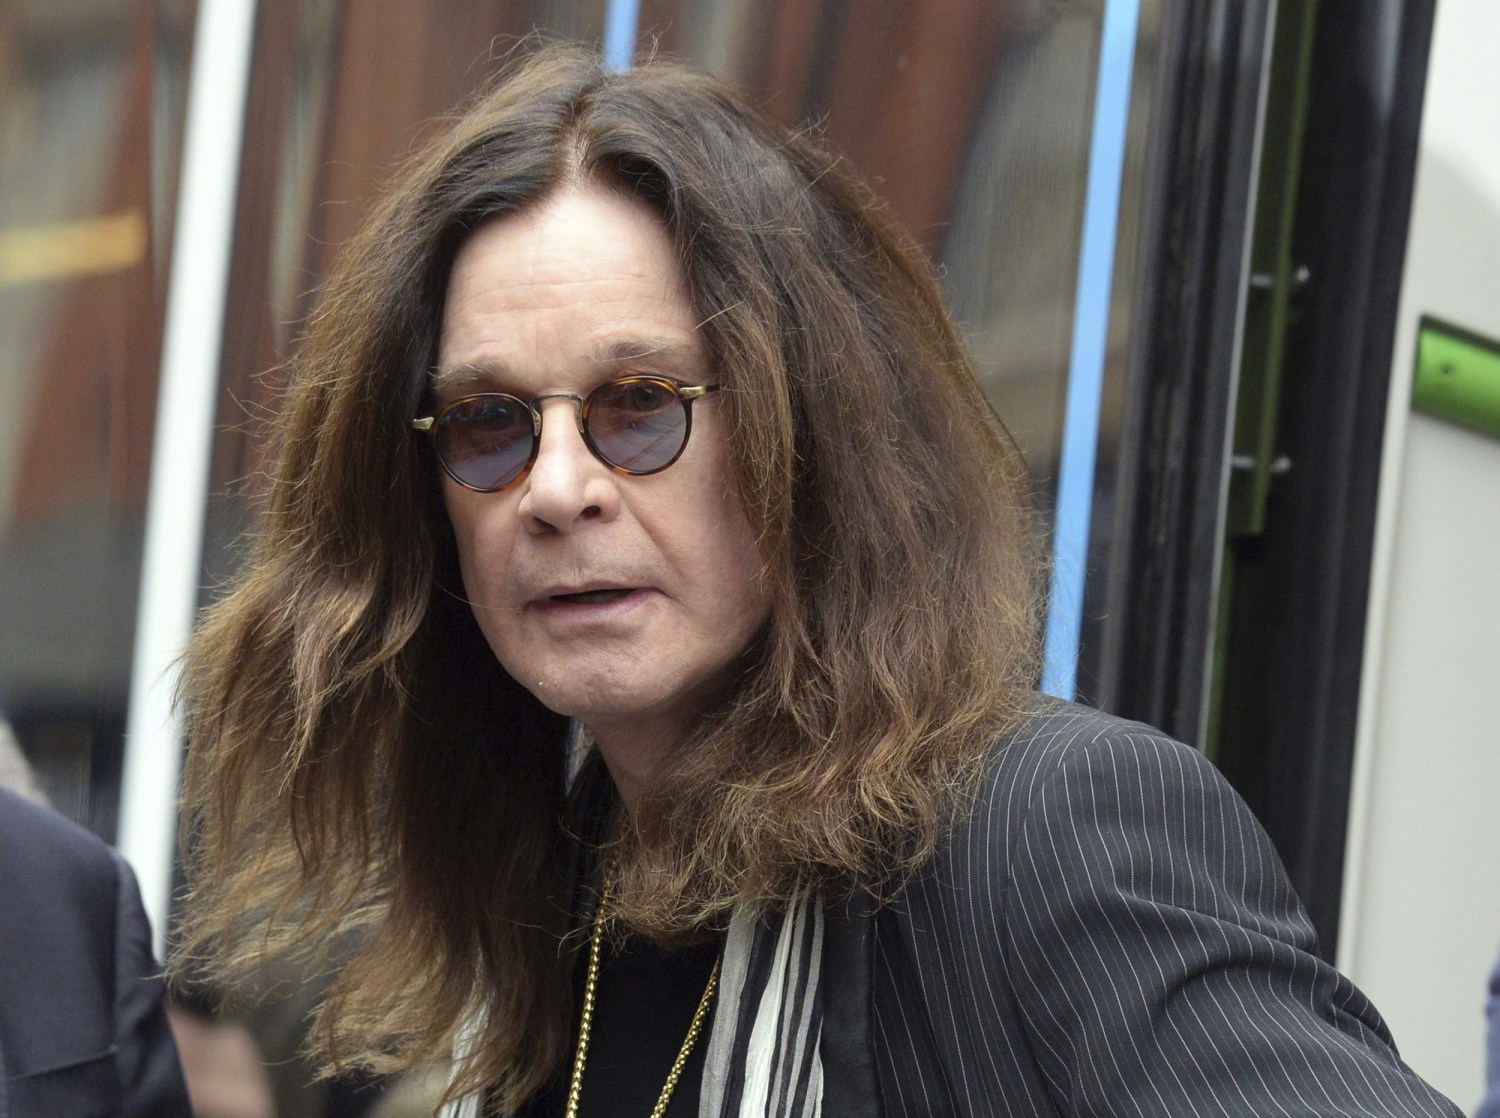 Ozzy Osbourne hospitalized over flu complications